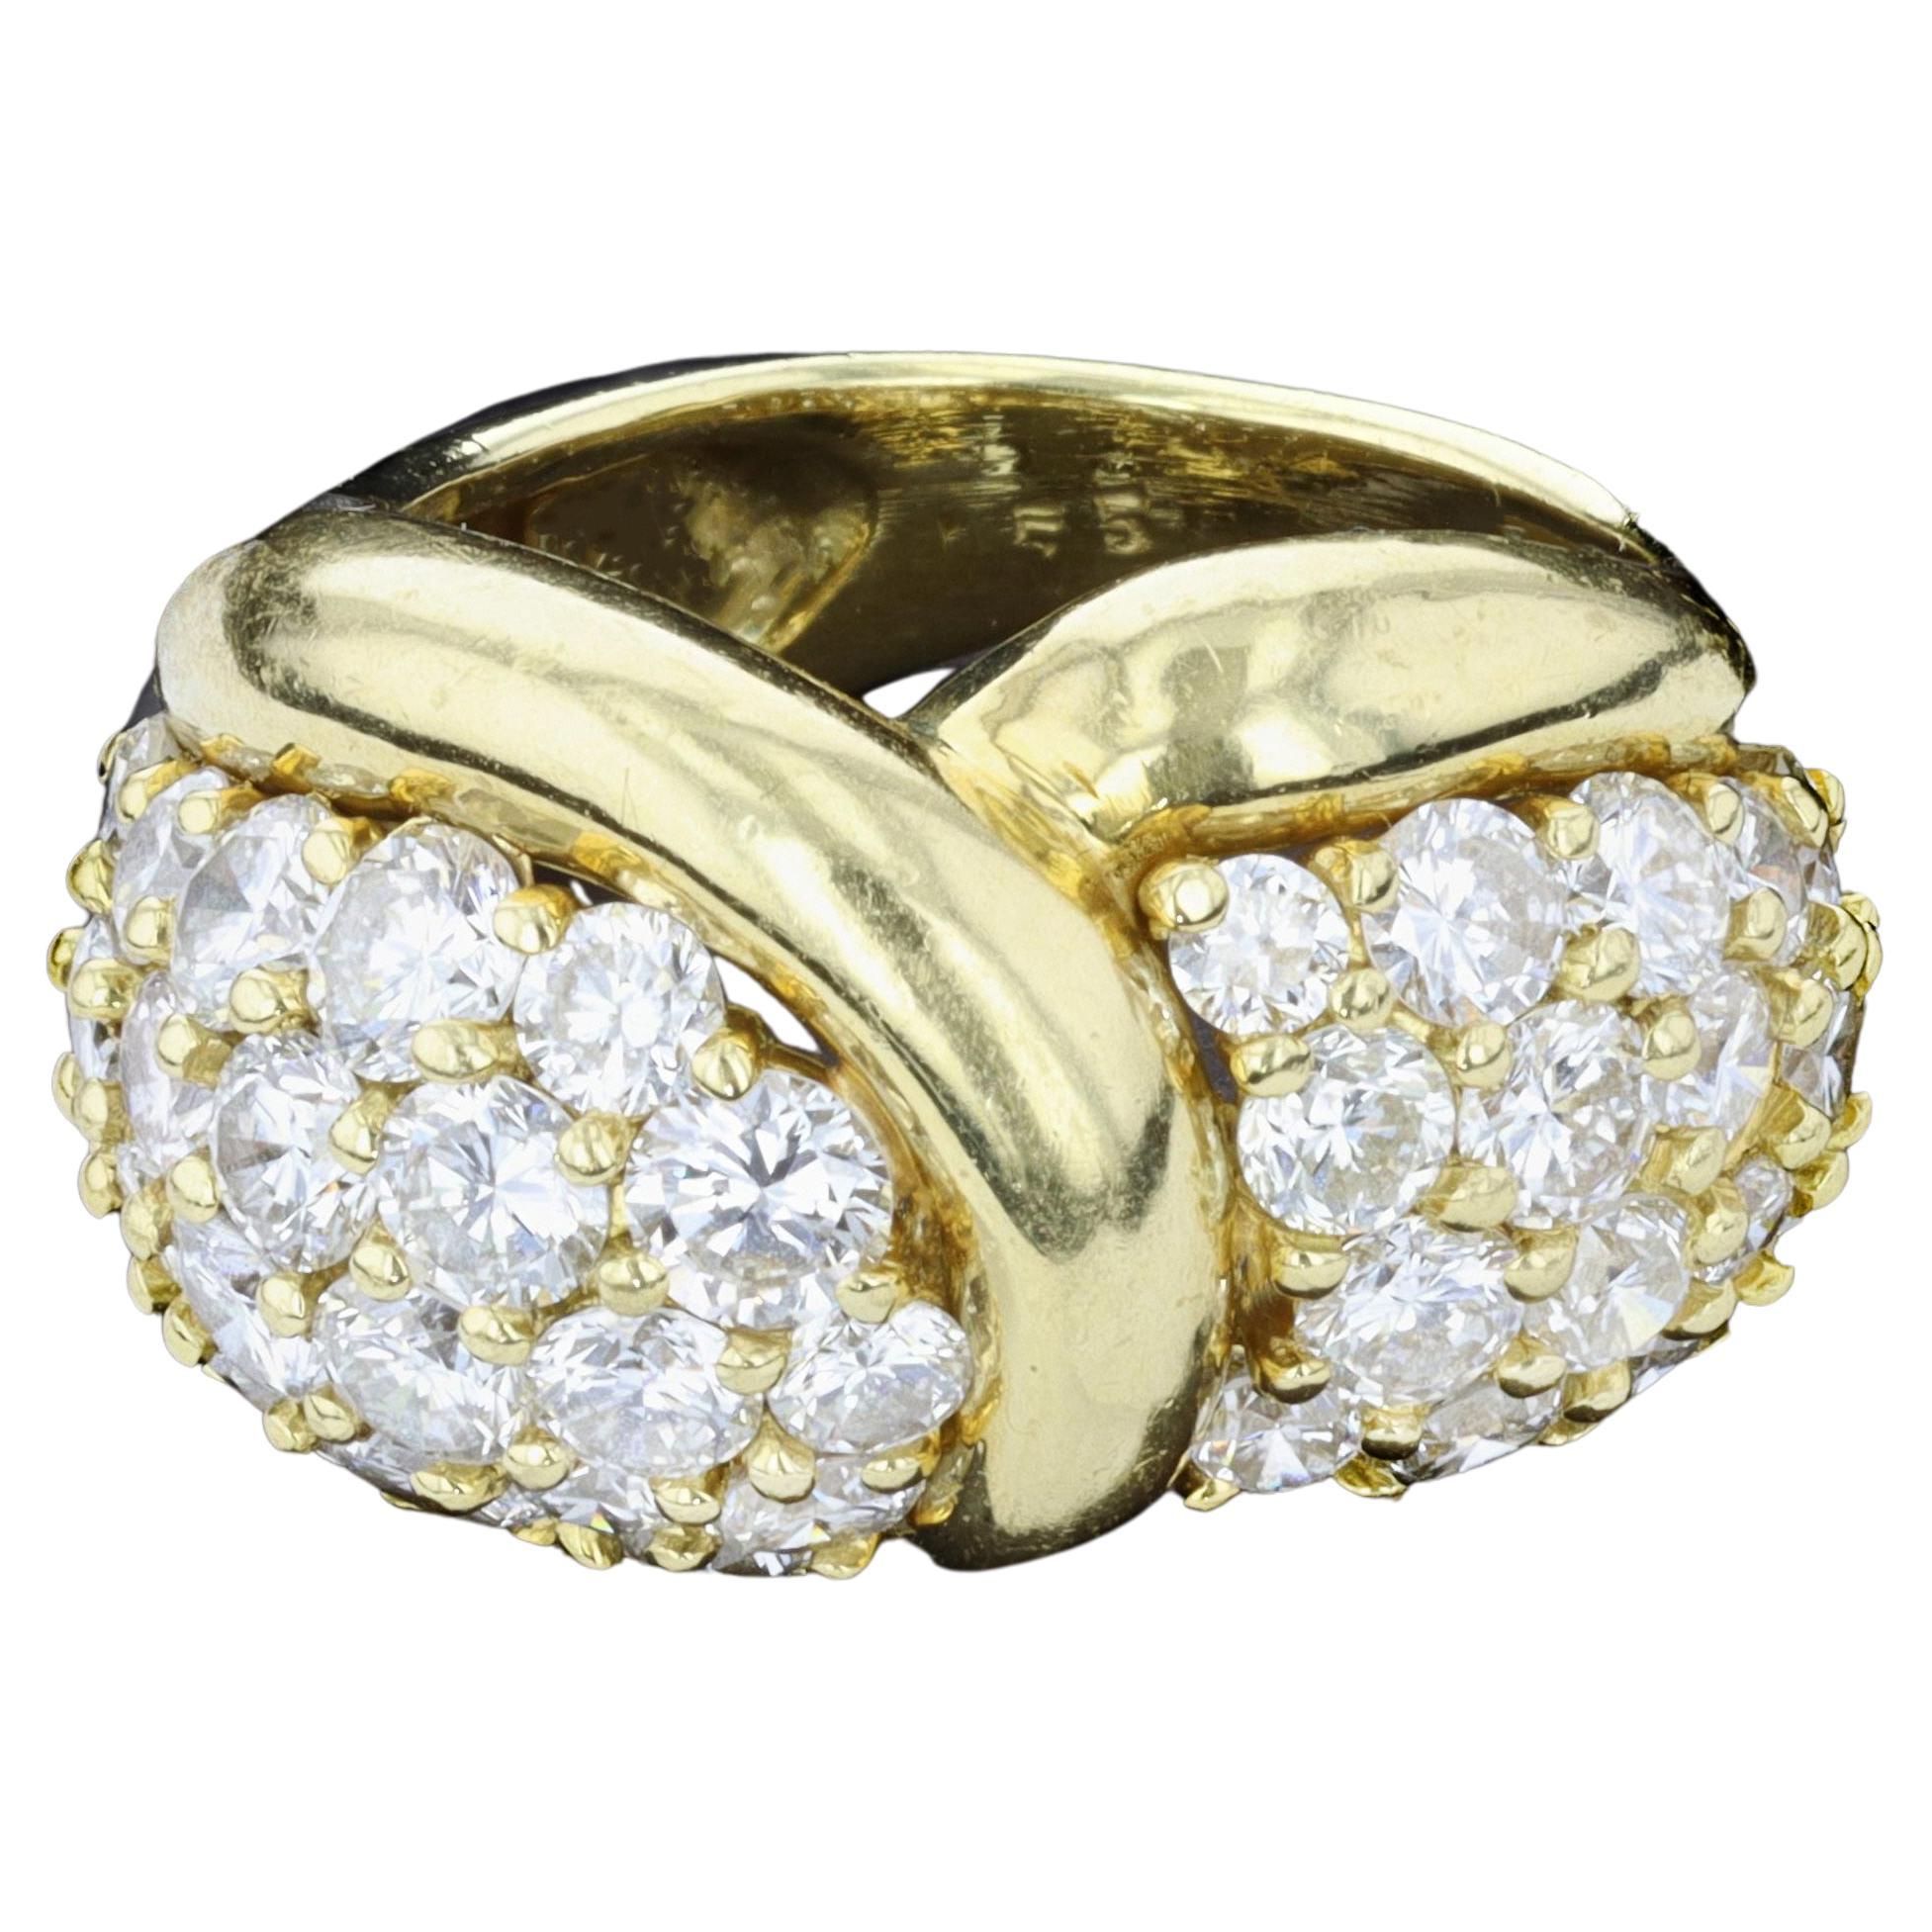 Jose Hess Bague fantaisie en or jaune 18 carats avec diamants